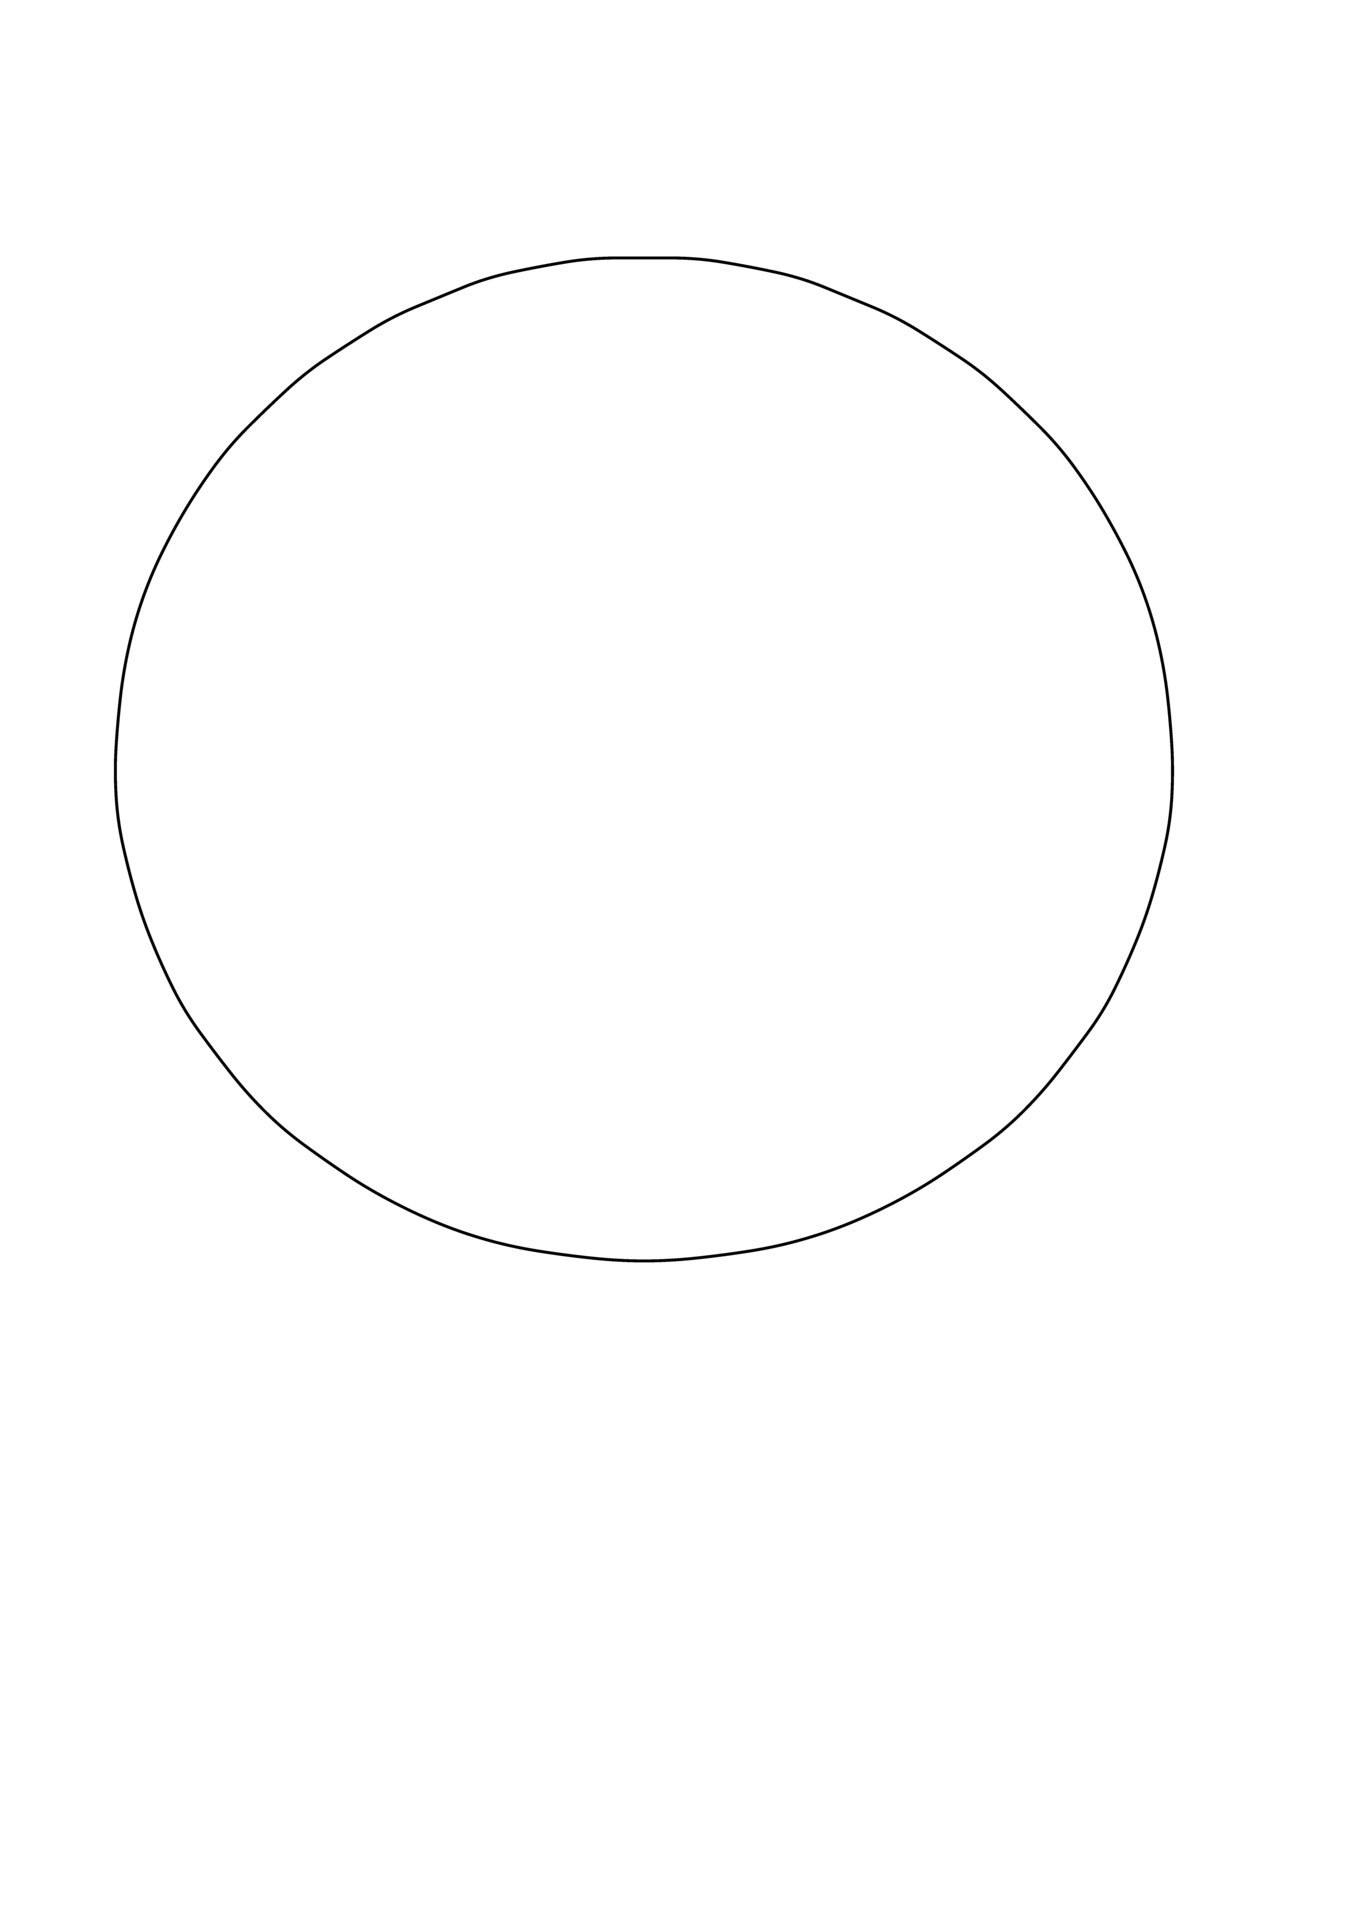 Круг 11 см. Шаблон "круги". Трафарет для торта круг. Трафарет круги. Окружности на листе а4.